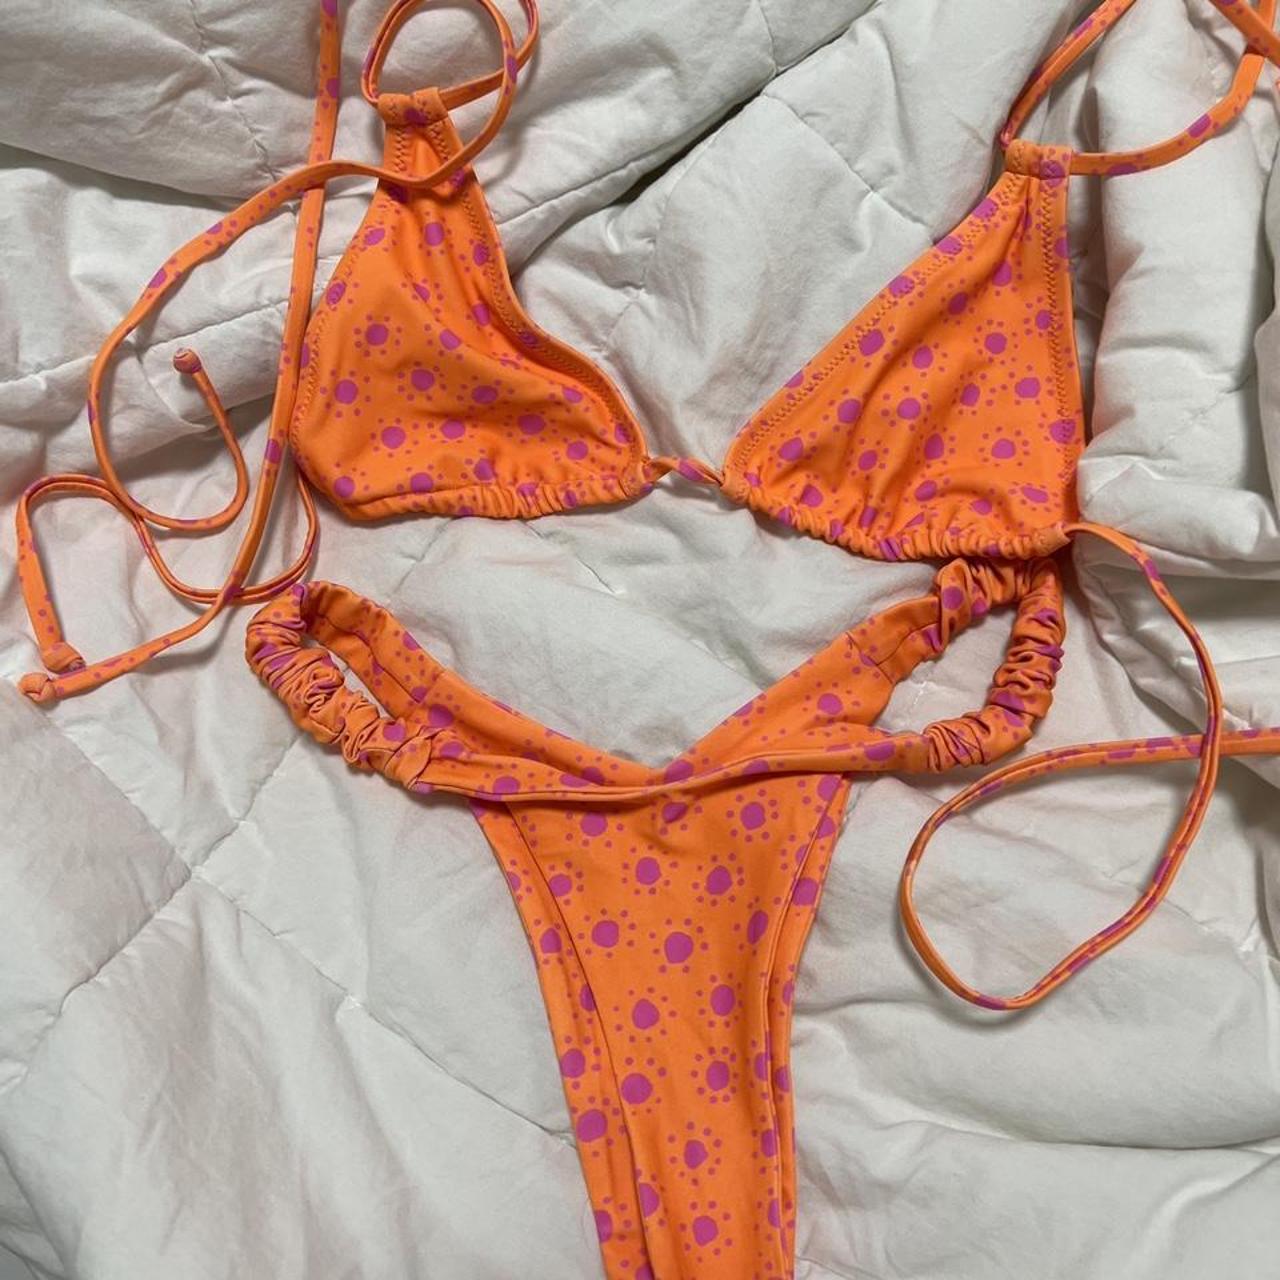 Women's Orange and Pink Bikinis-and-tankini-sets (2)